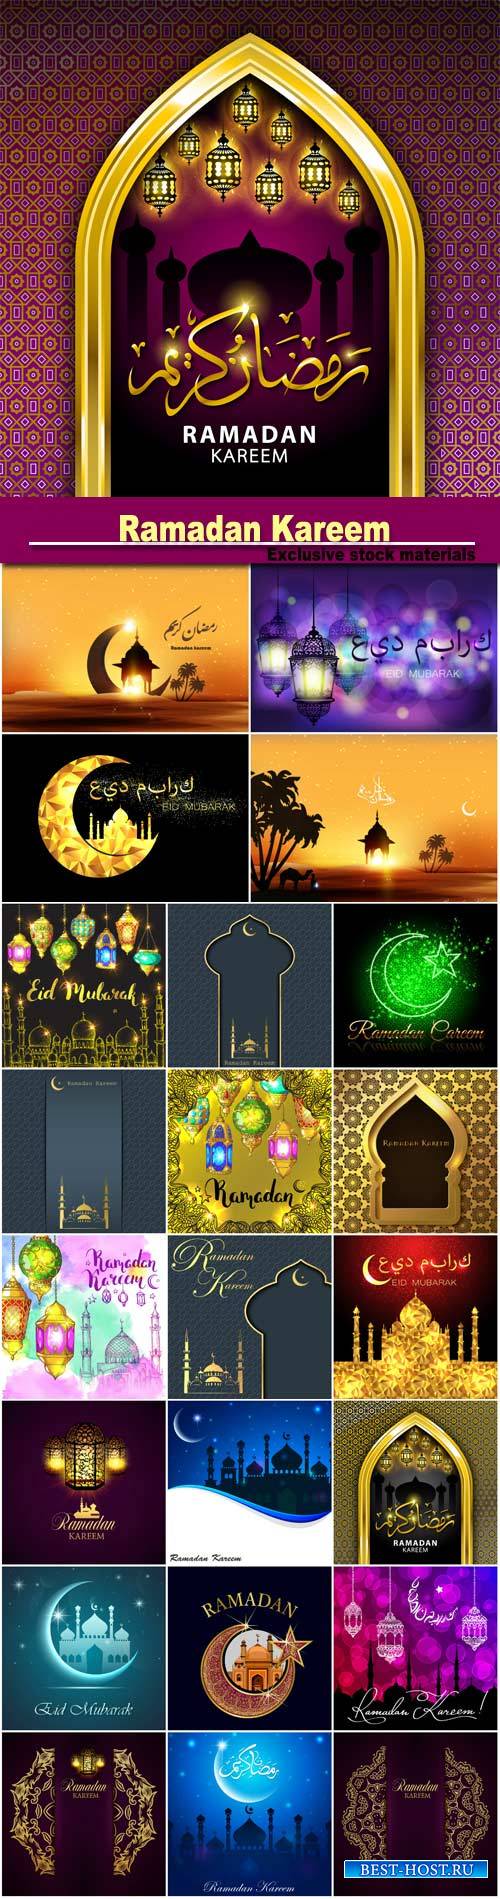 Ramadan Kareem, a Muslim holiday, beautiful backgrounds vector